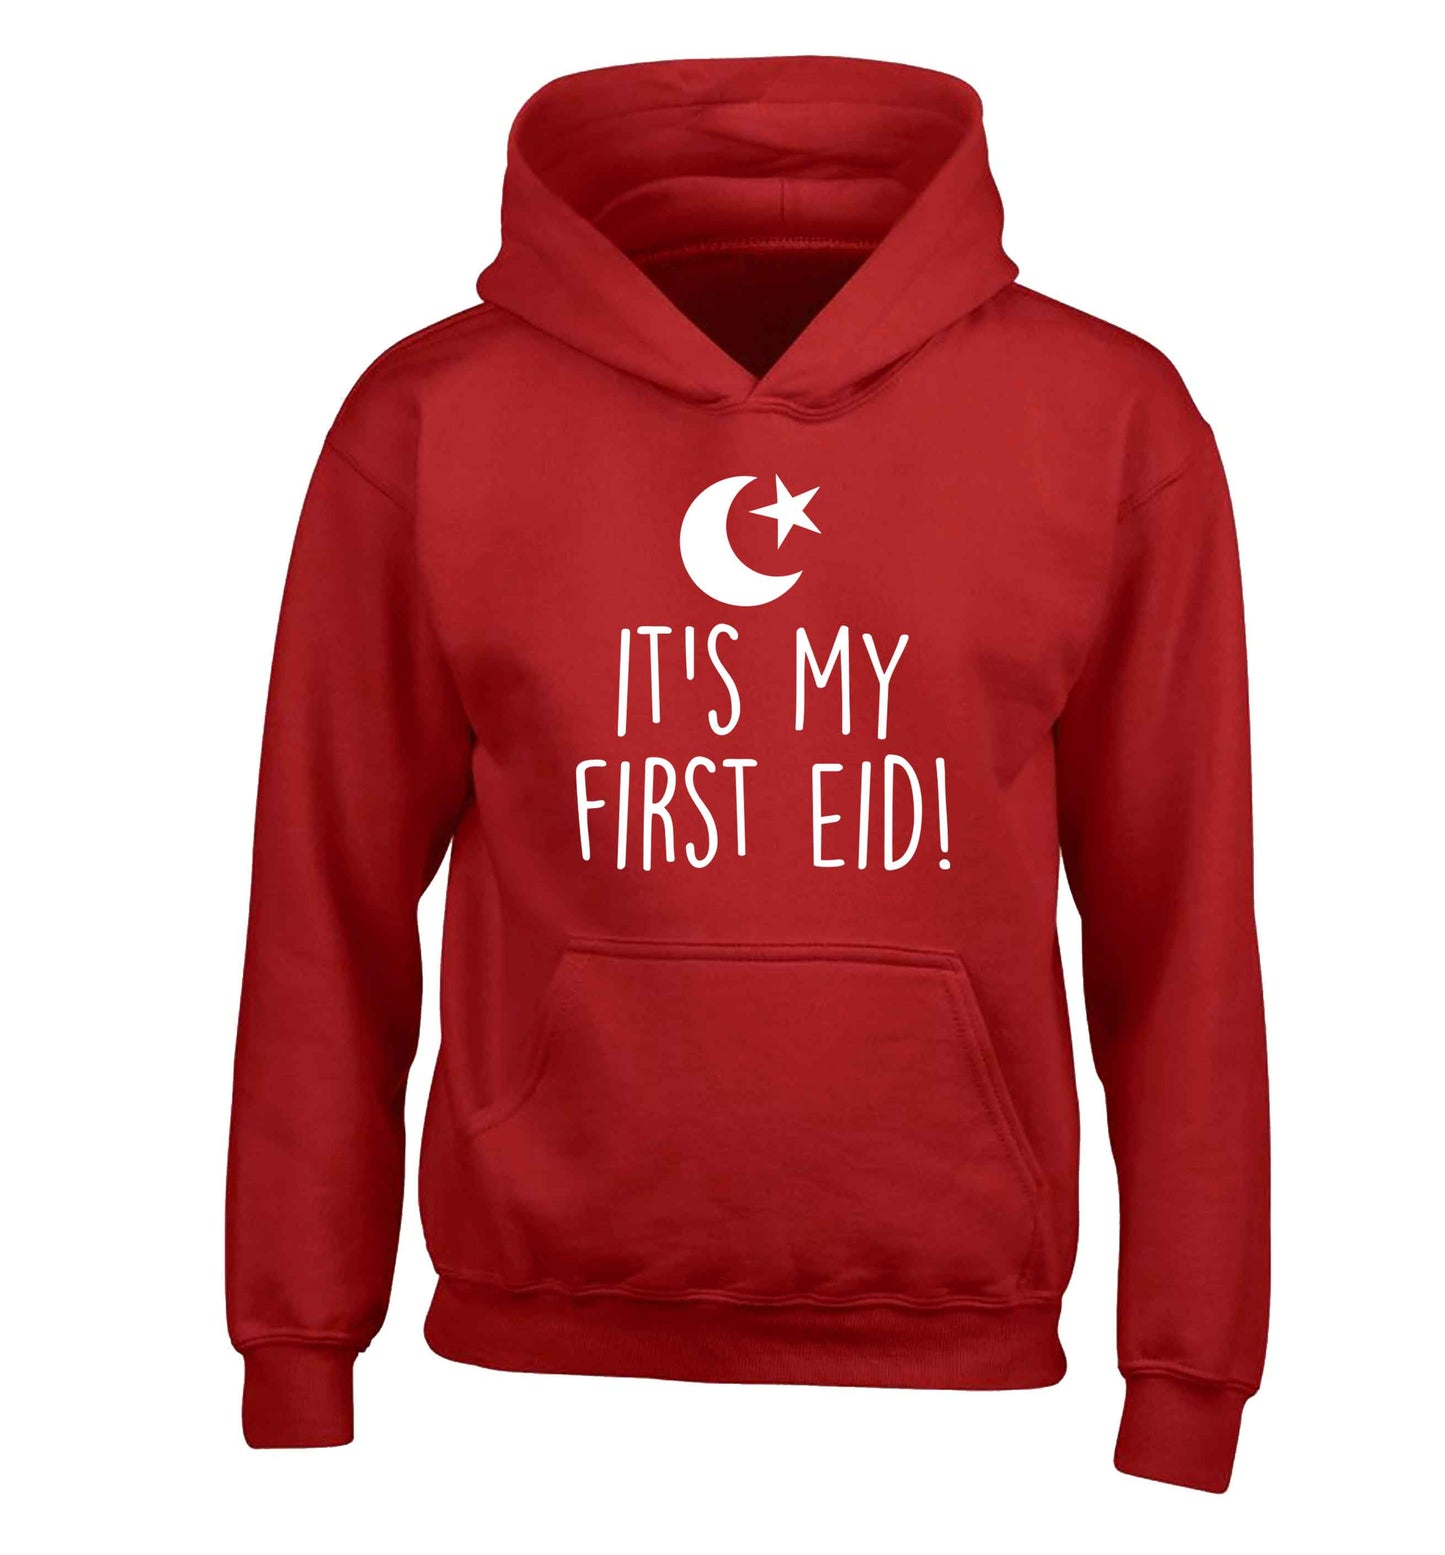 It's my first Eid children's red hoodie 12-13 Years